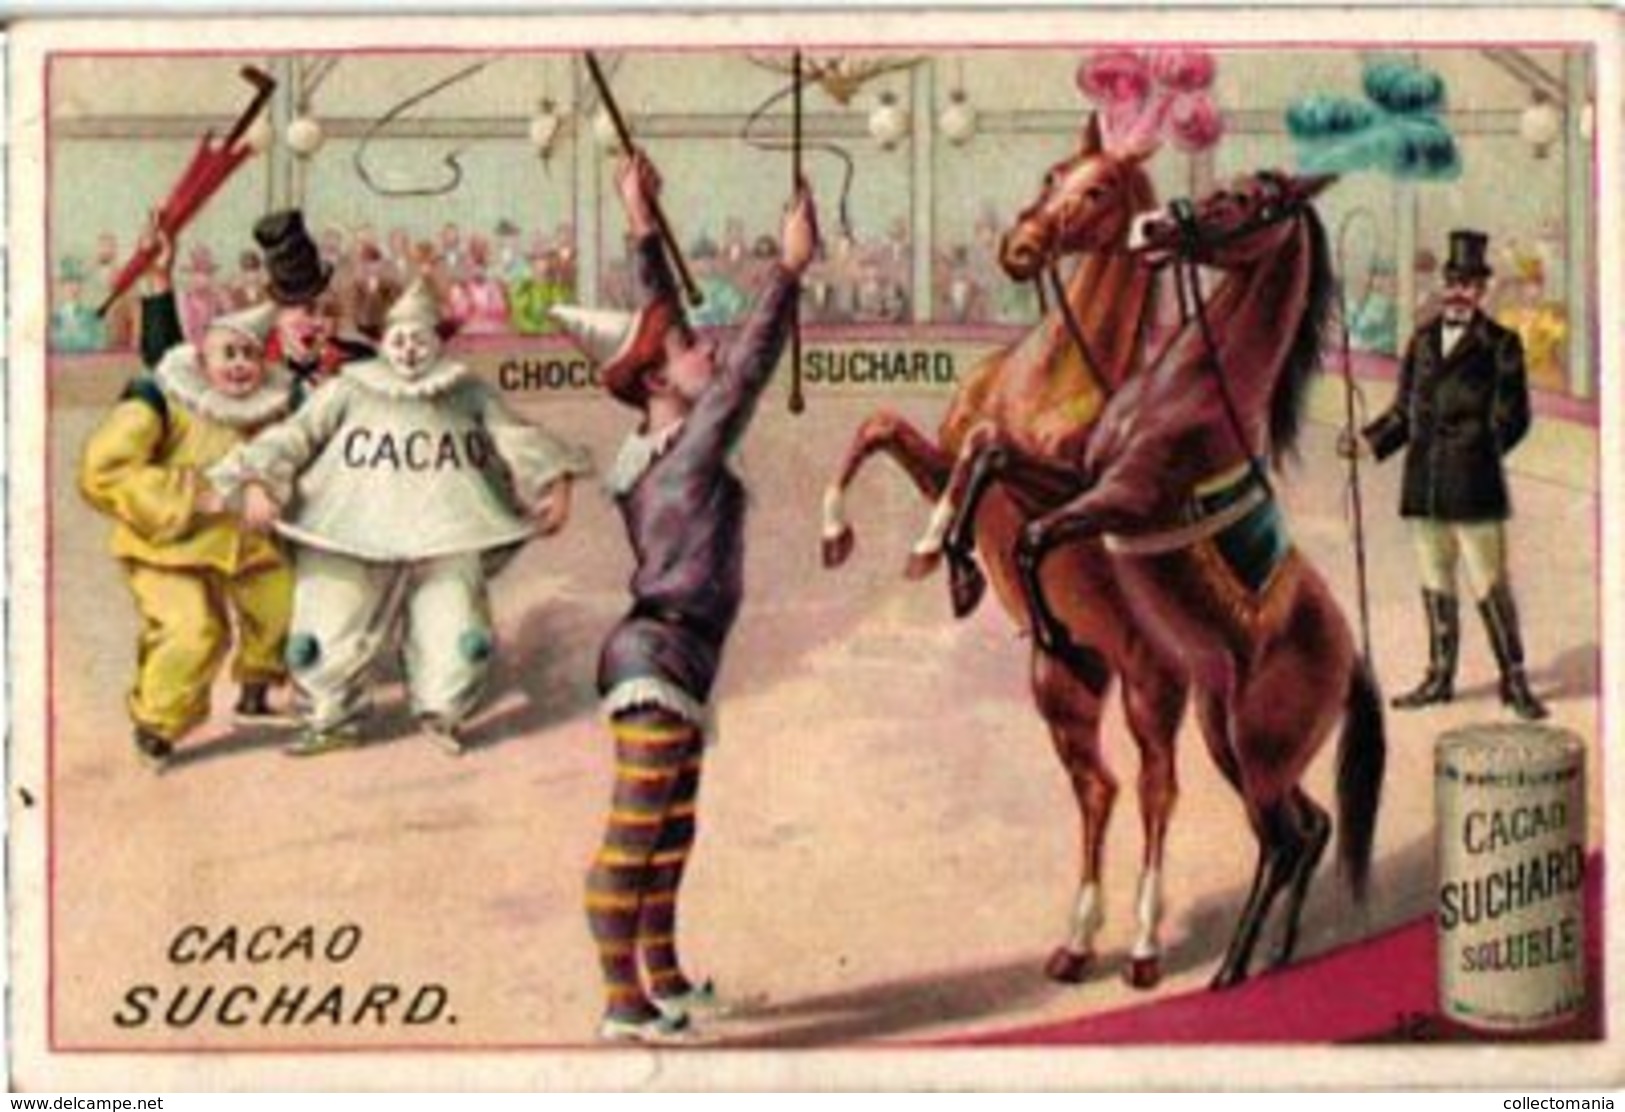 6 Chromo Litho Cards Swiss Chocolate SUCHARD Set68B  C1898 Circus Scenes Clowns Taming Litho Suisse Humor VG - Suchard